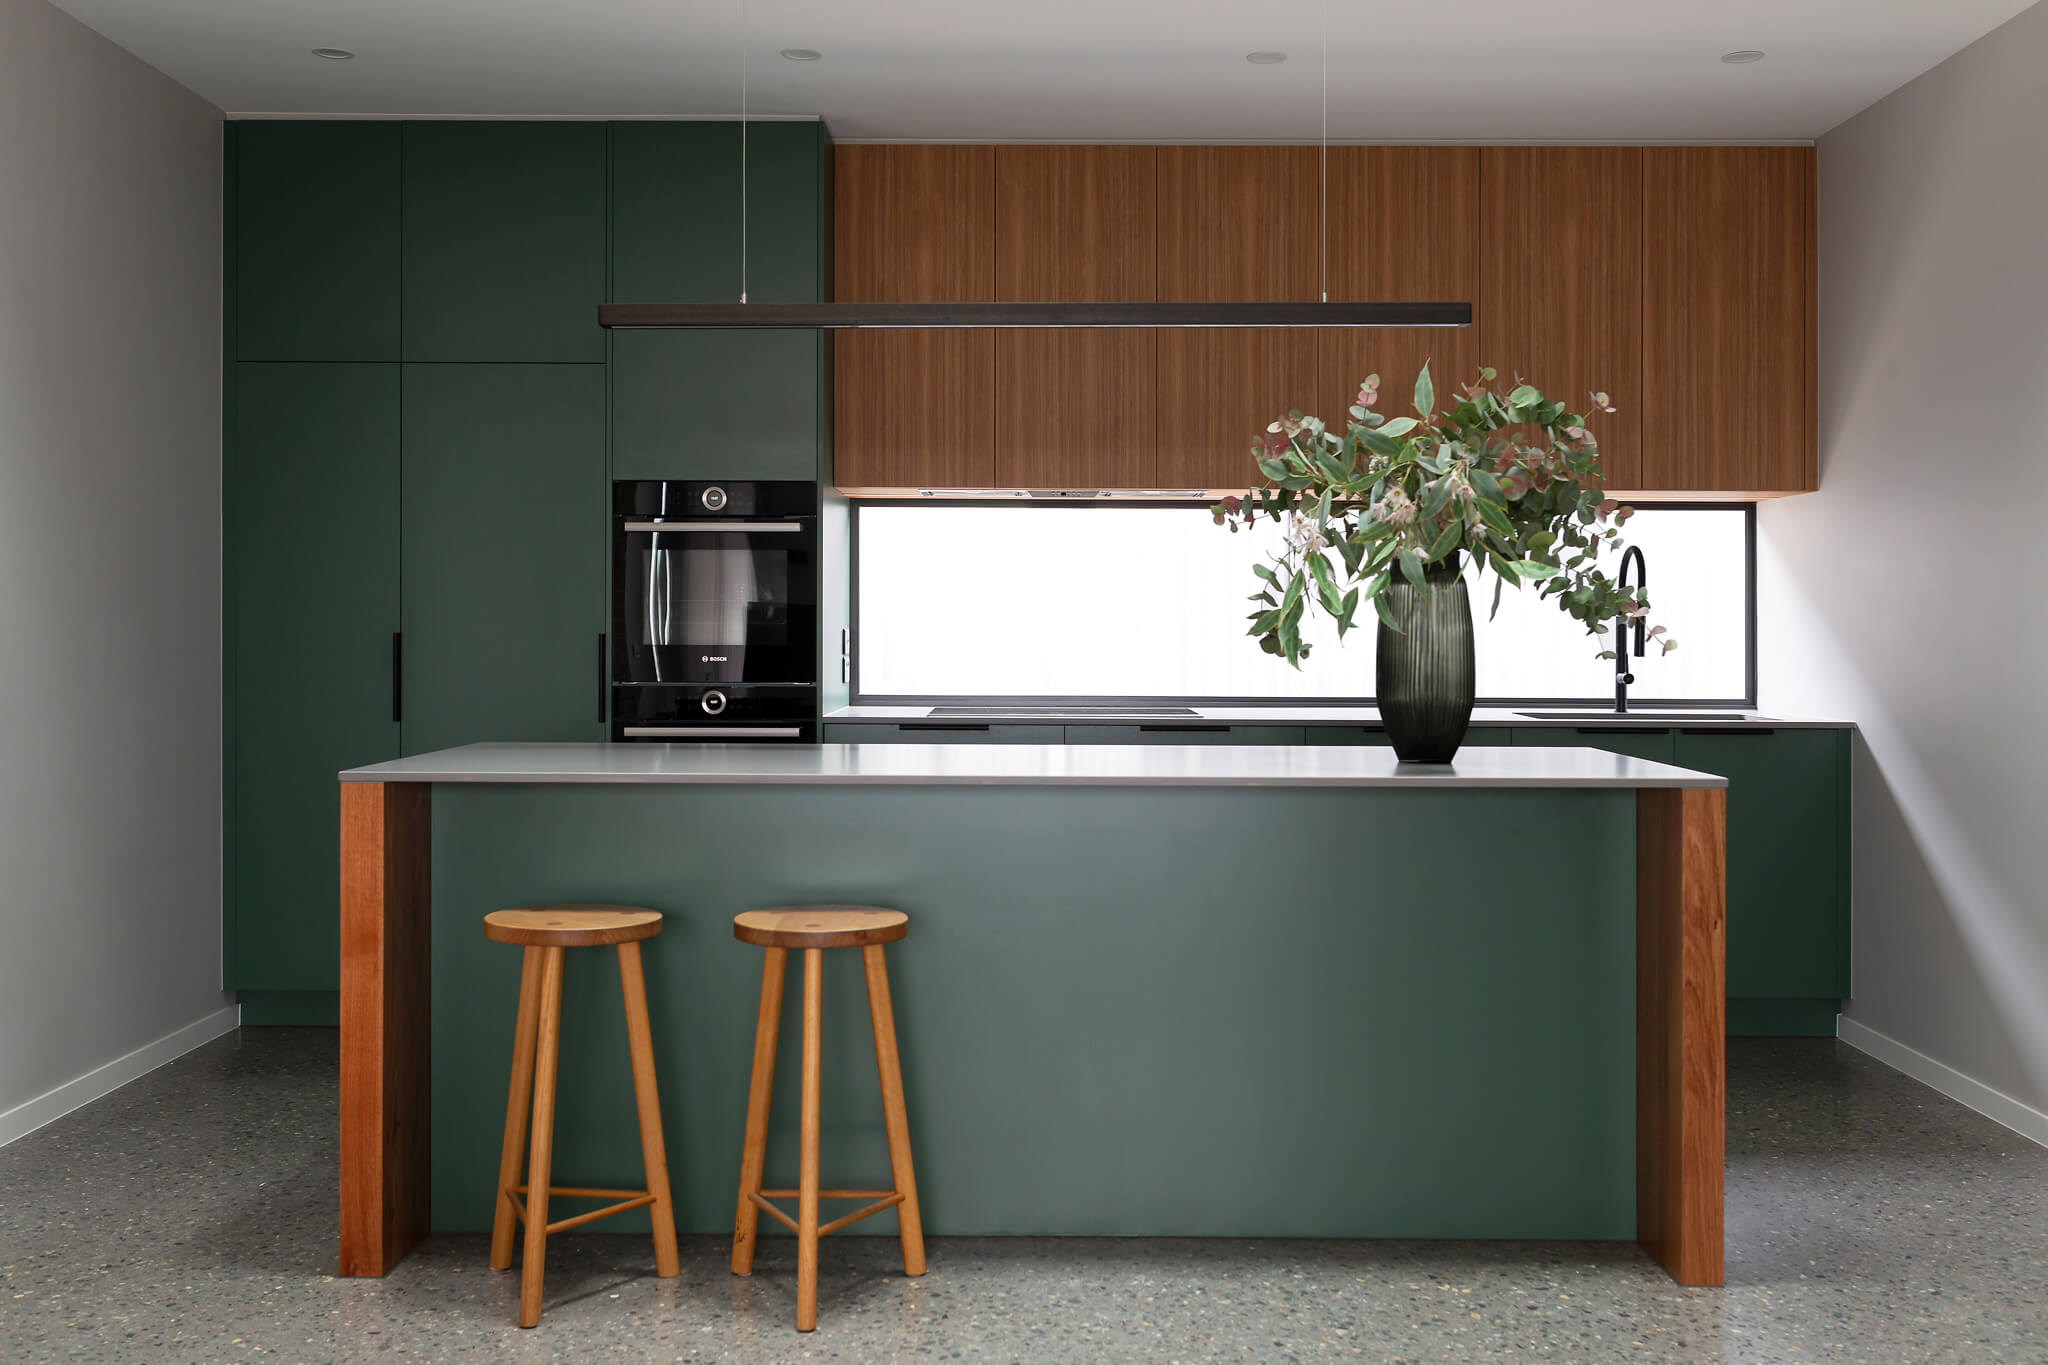 Strathnairn Residence, Interior design and styling by Studio Black Interiors, Canberra, Australia